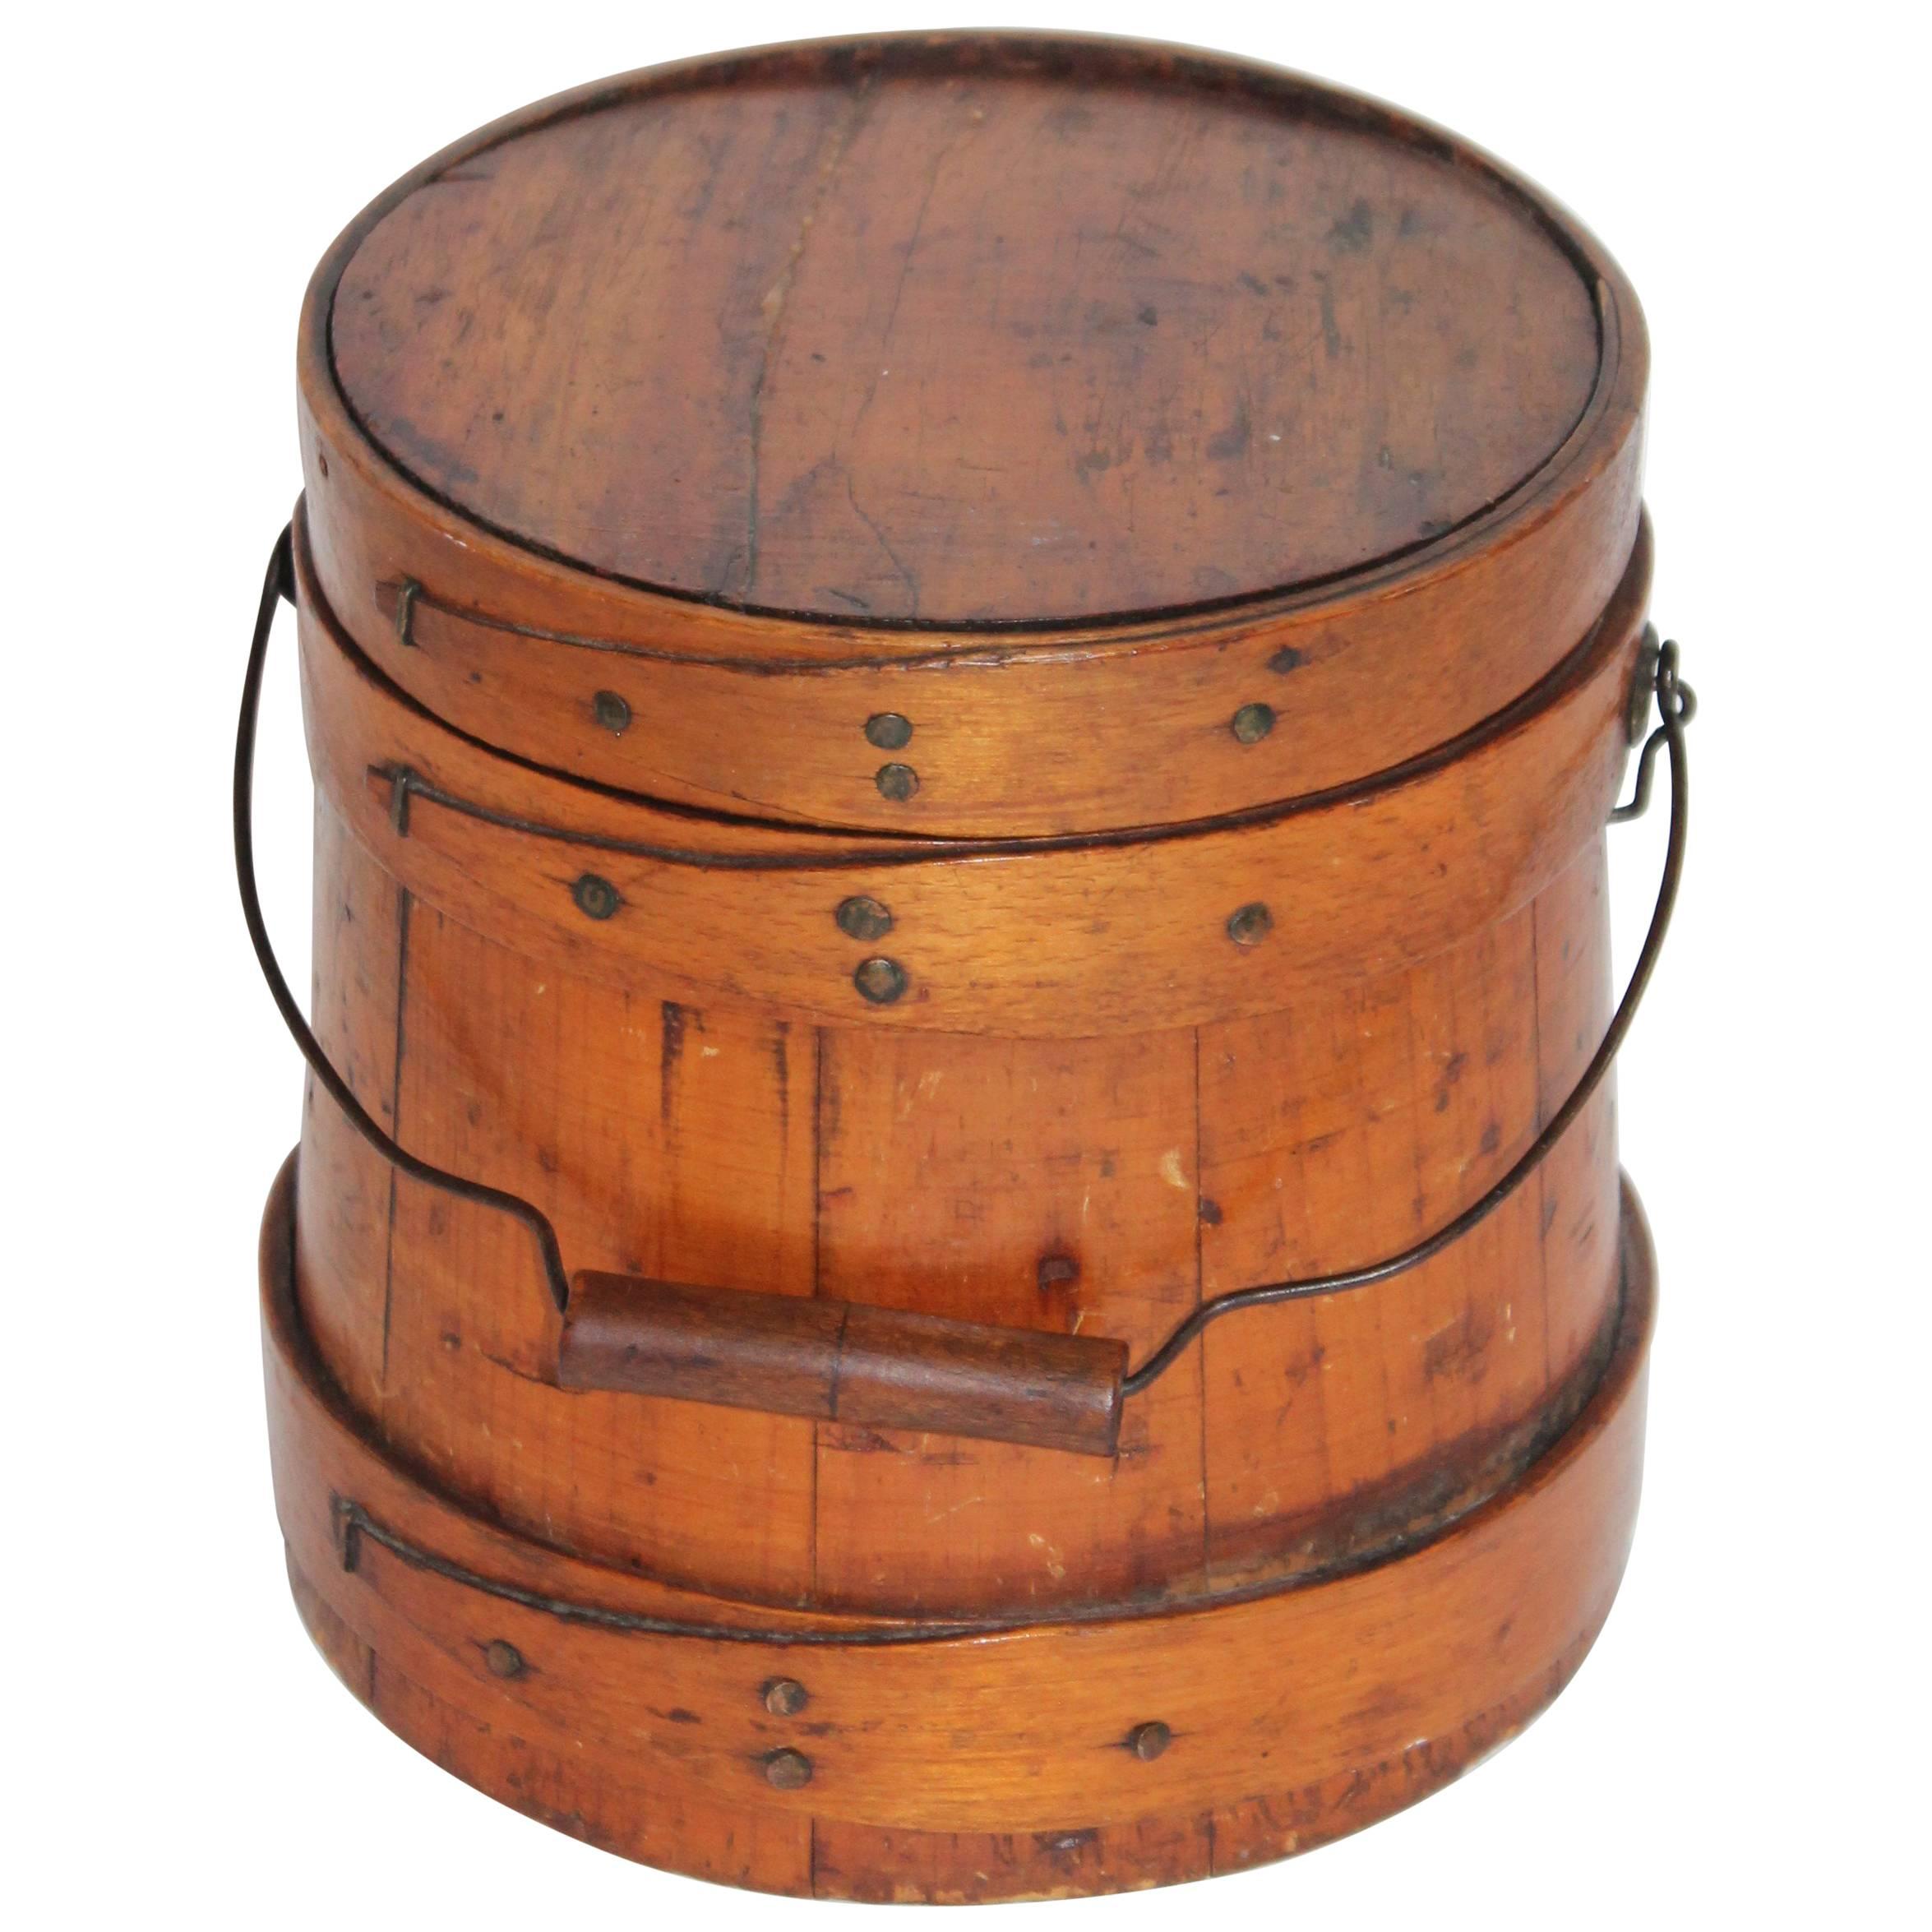 19th Century Shaker Style Sugar Bucket from New England